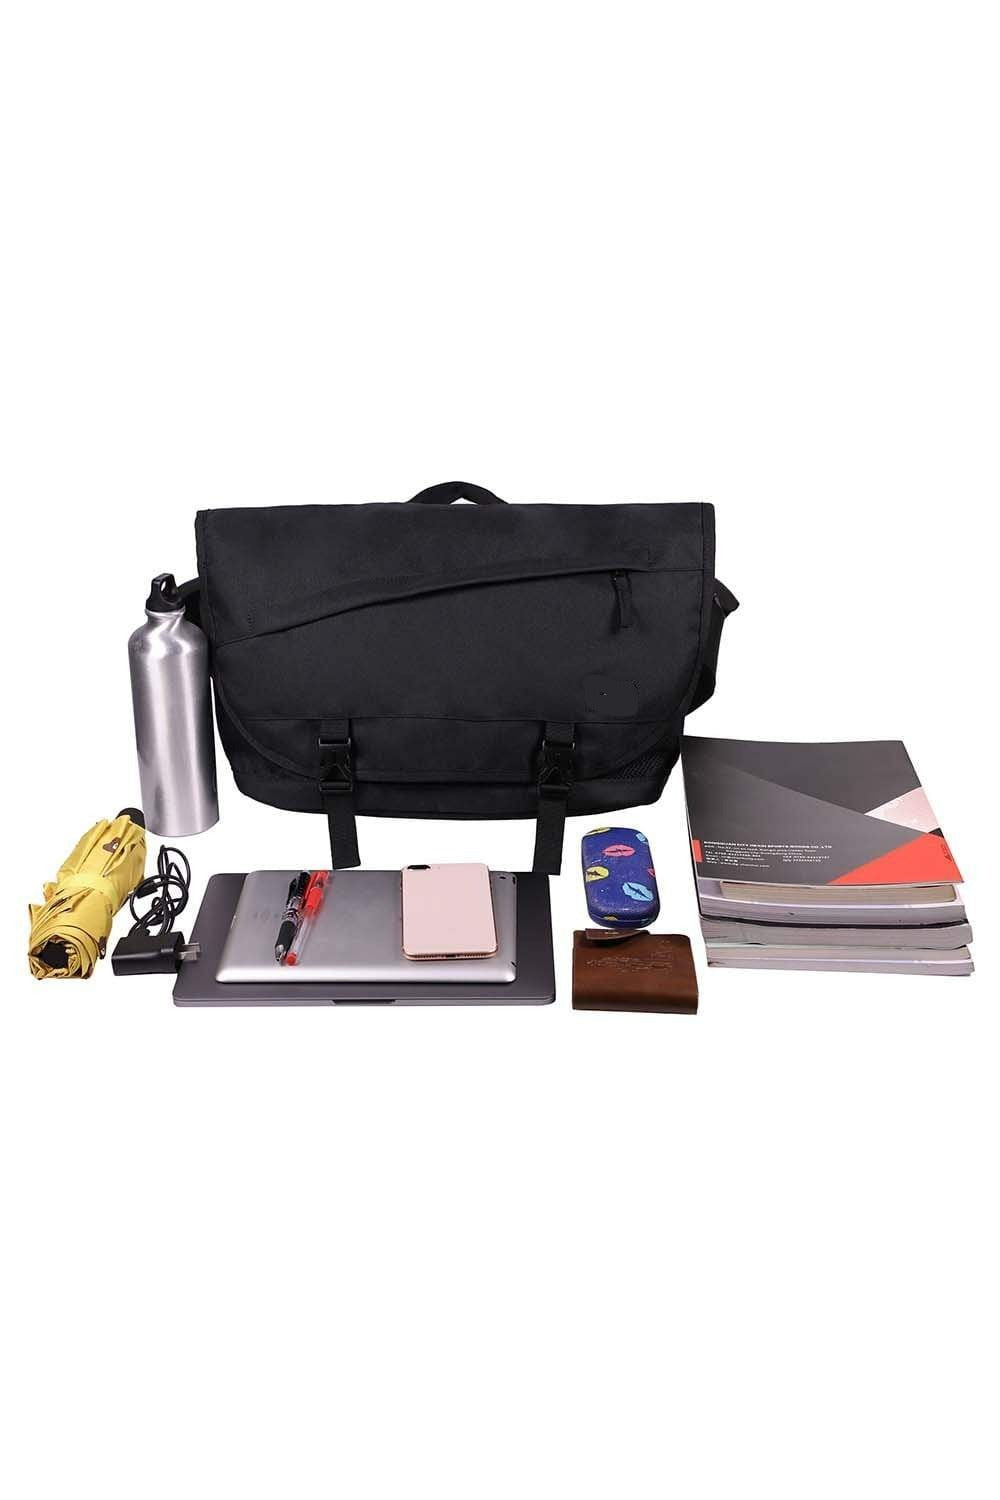 MIERSPORT Nylon Laptop Messenger Bag Multiple Pockets